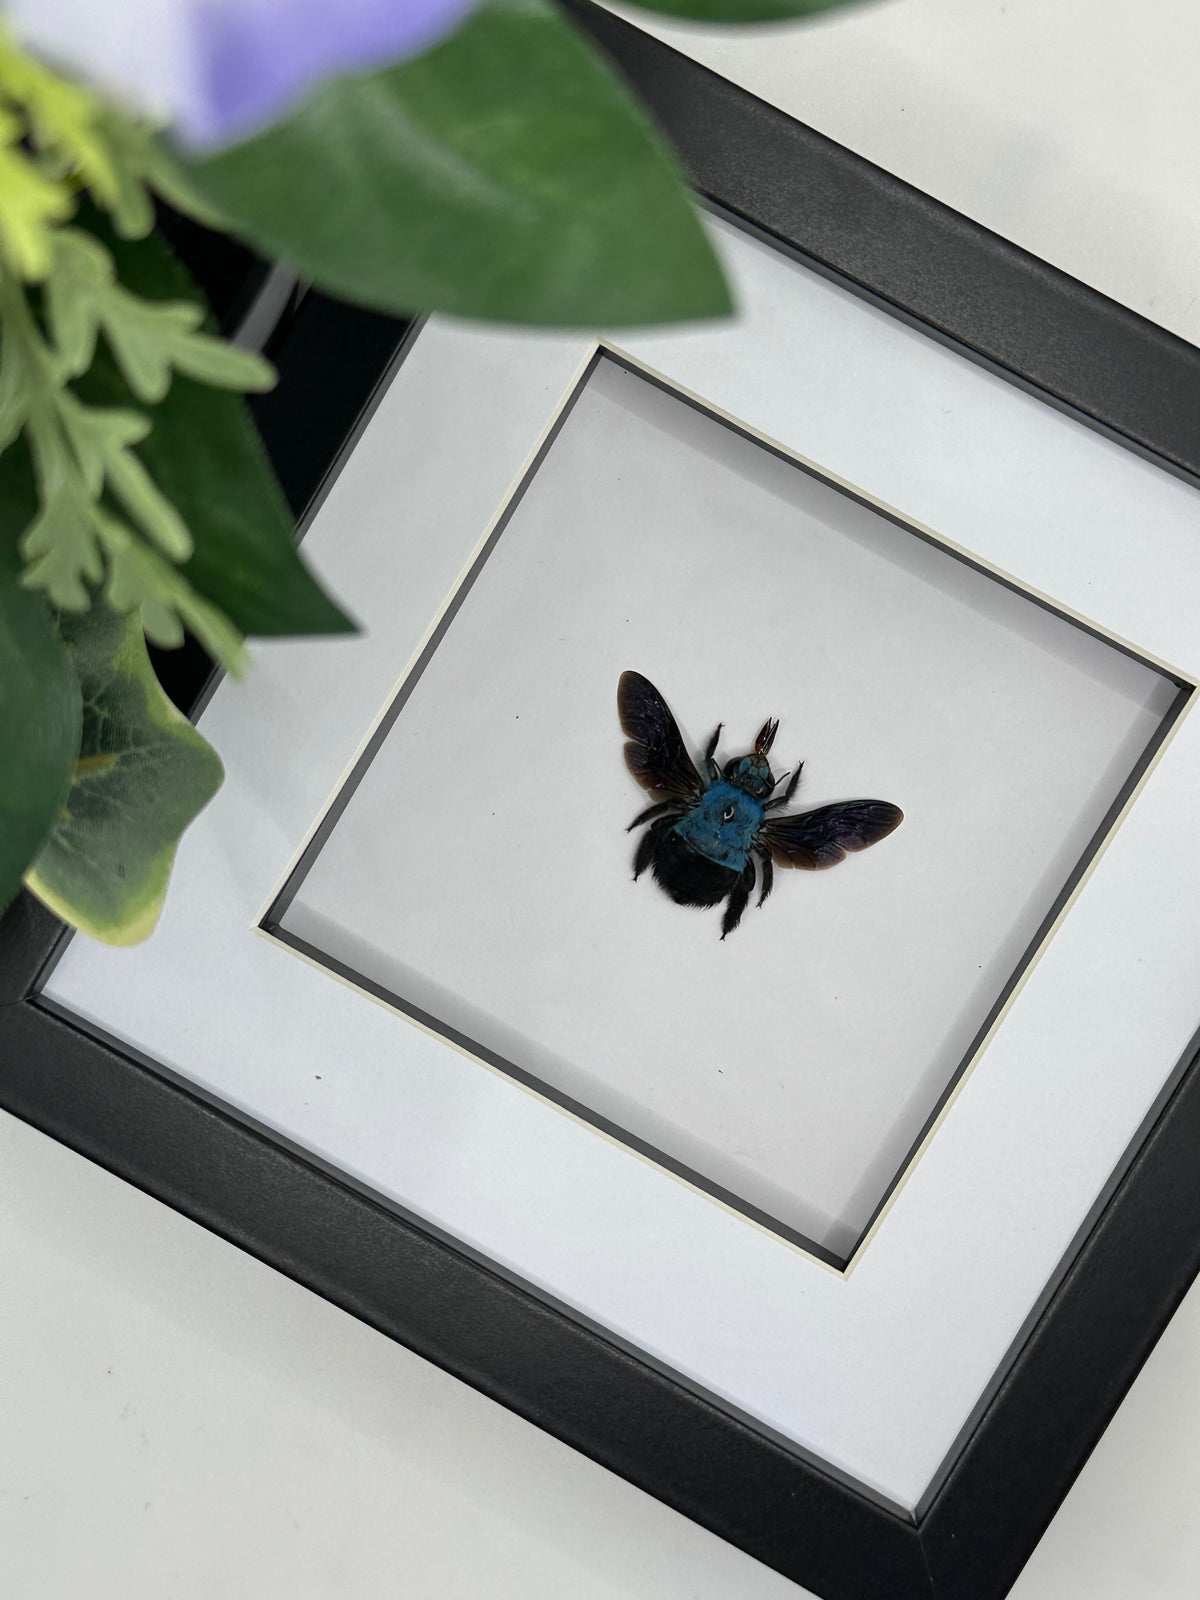 Blue Carpenter Bee / Xylocopa Caerulea in a frame